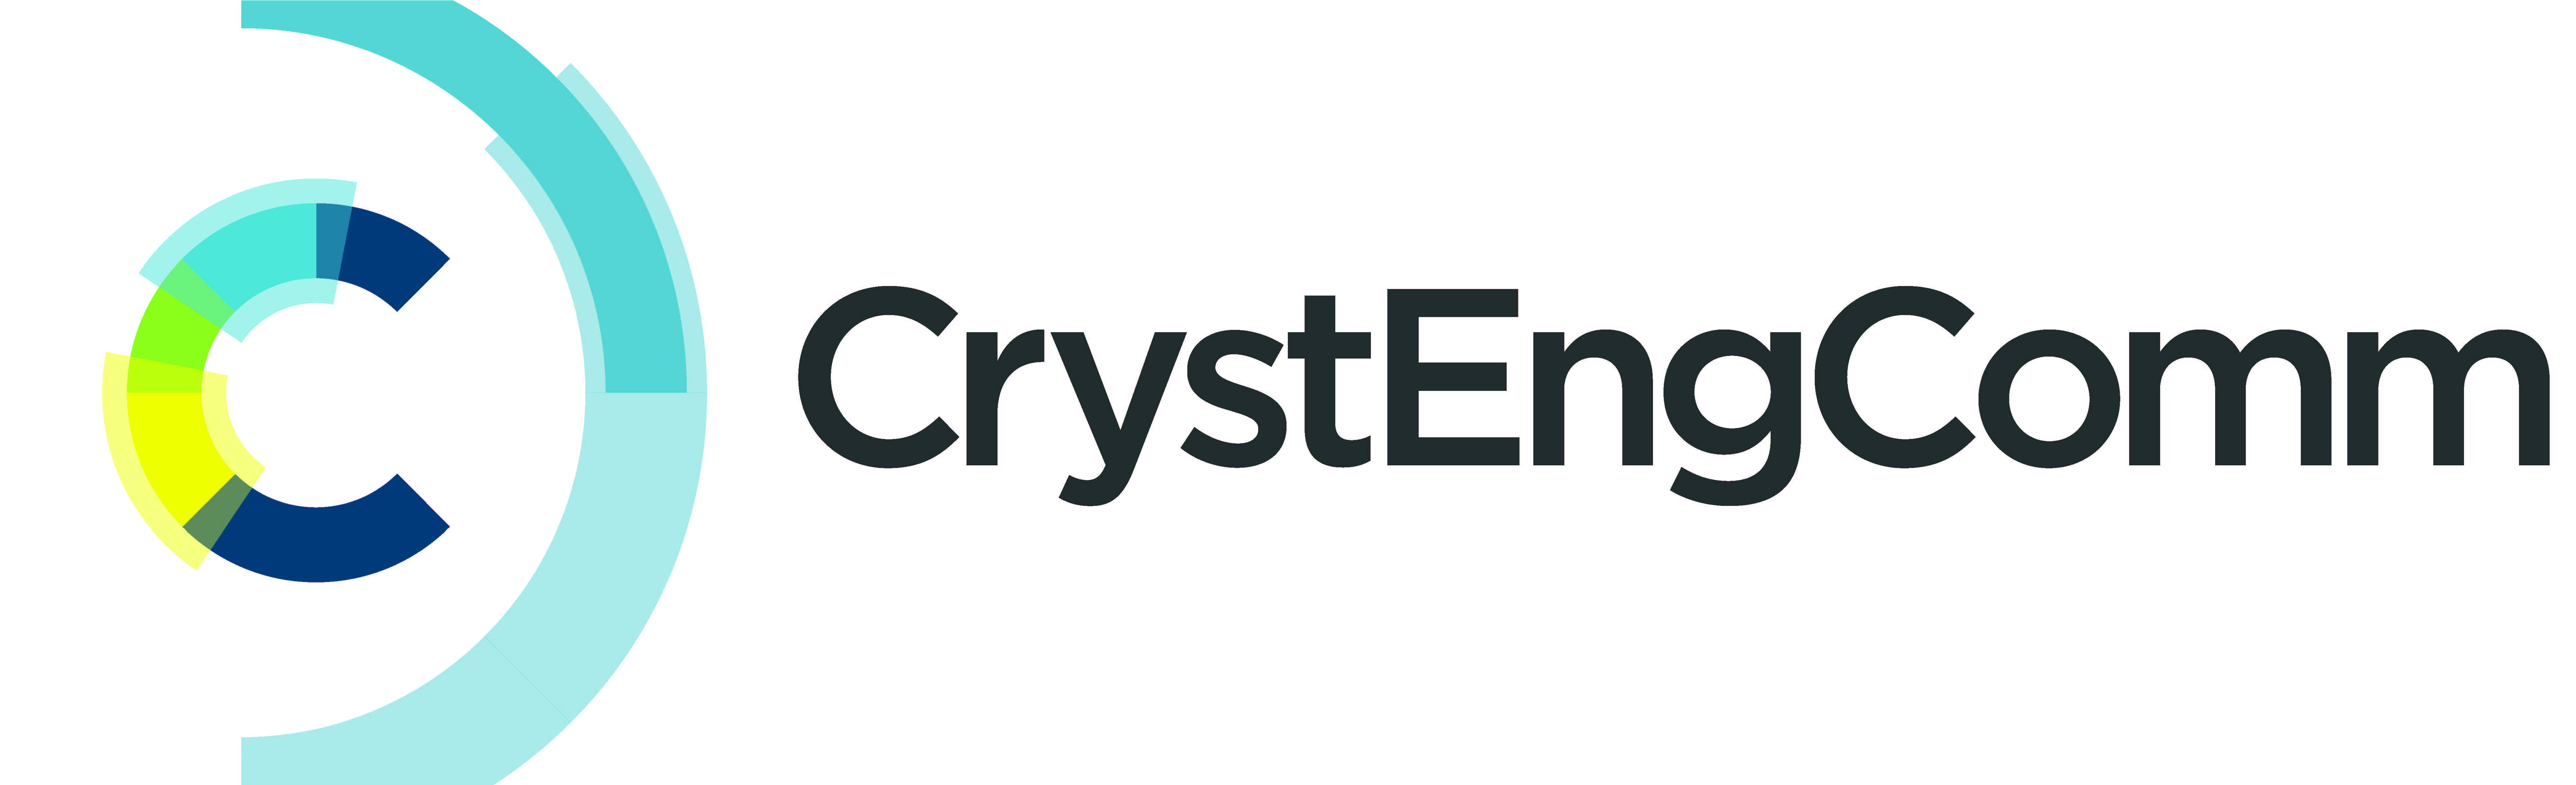 CrystEngComm logo